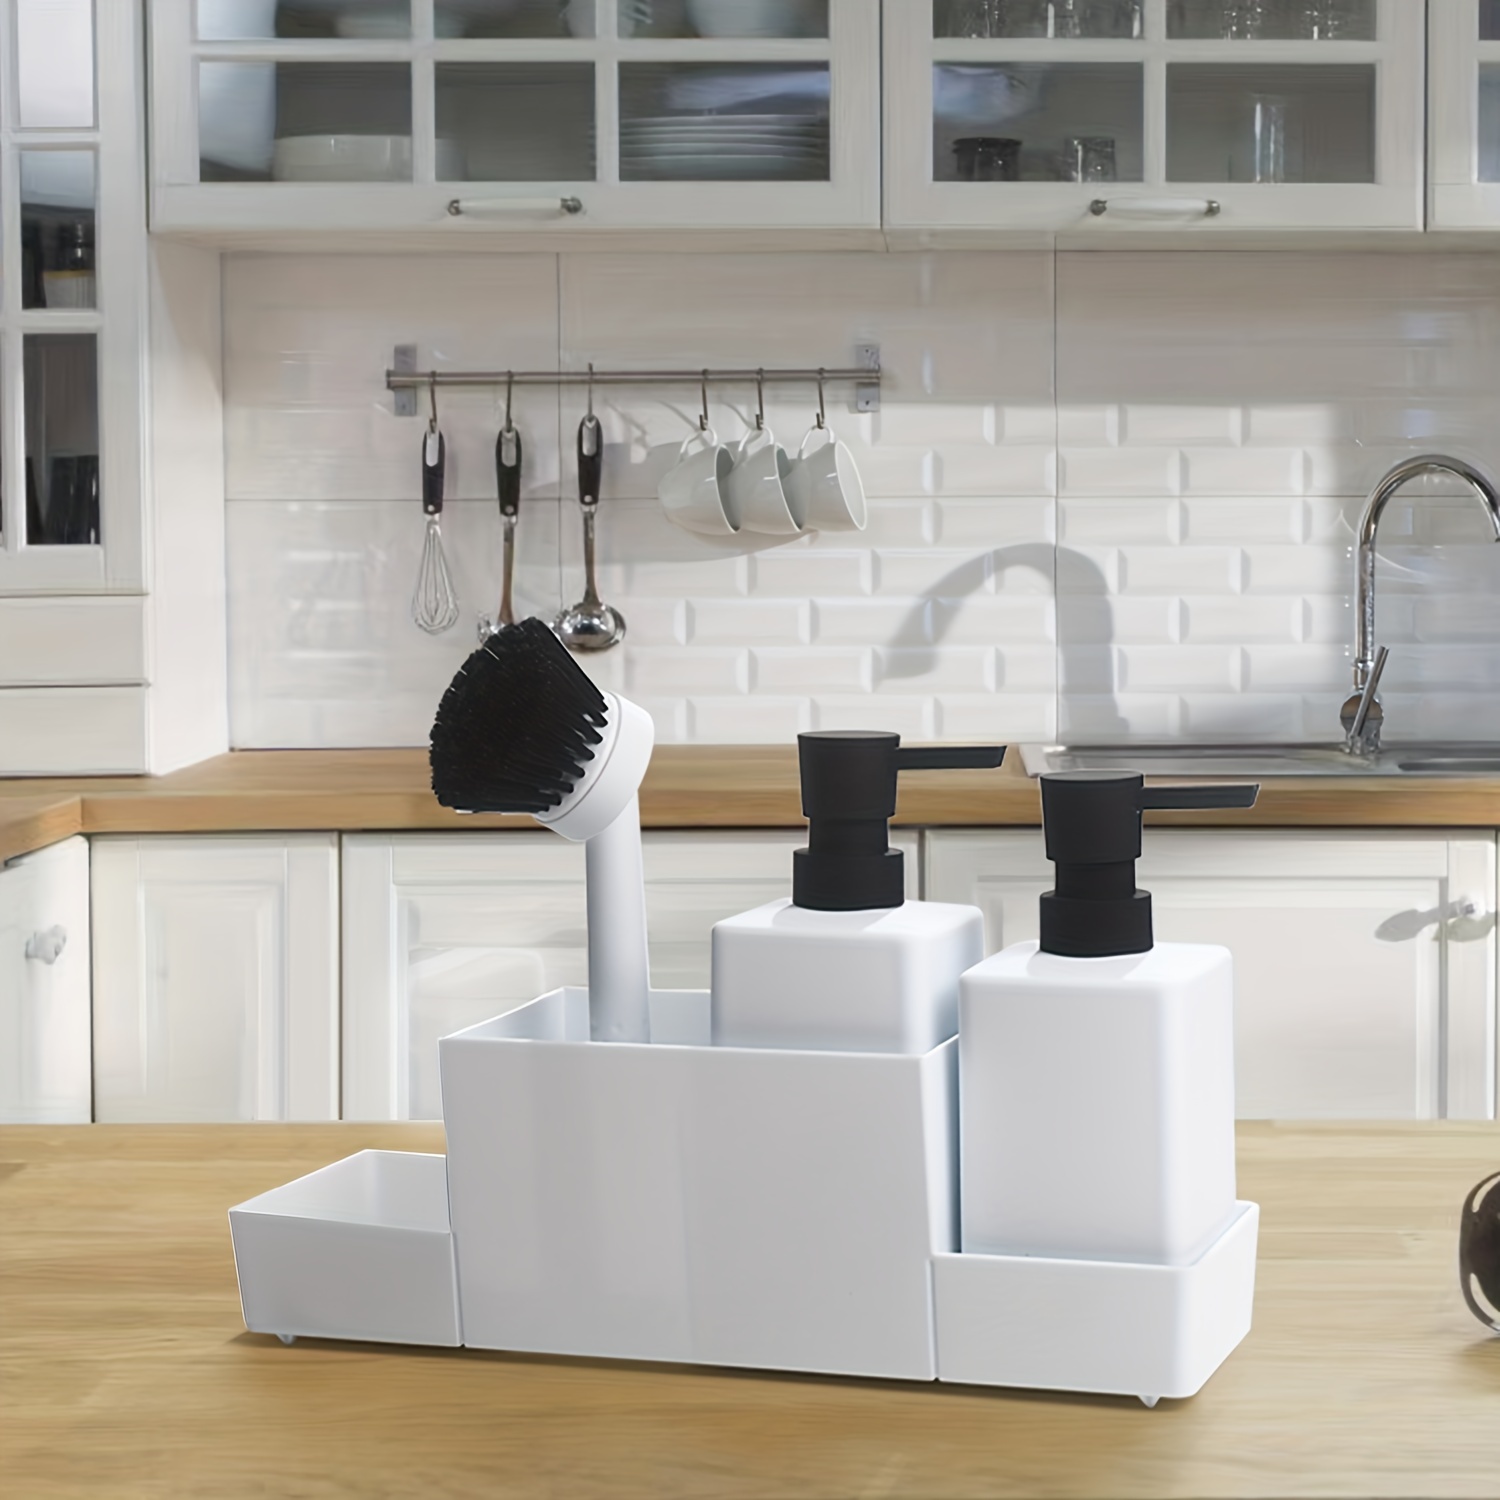 mDesign Plastic Kitchen Soap Dispenser Pump/Sponge Holder Caddy